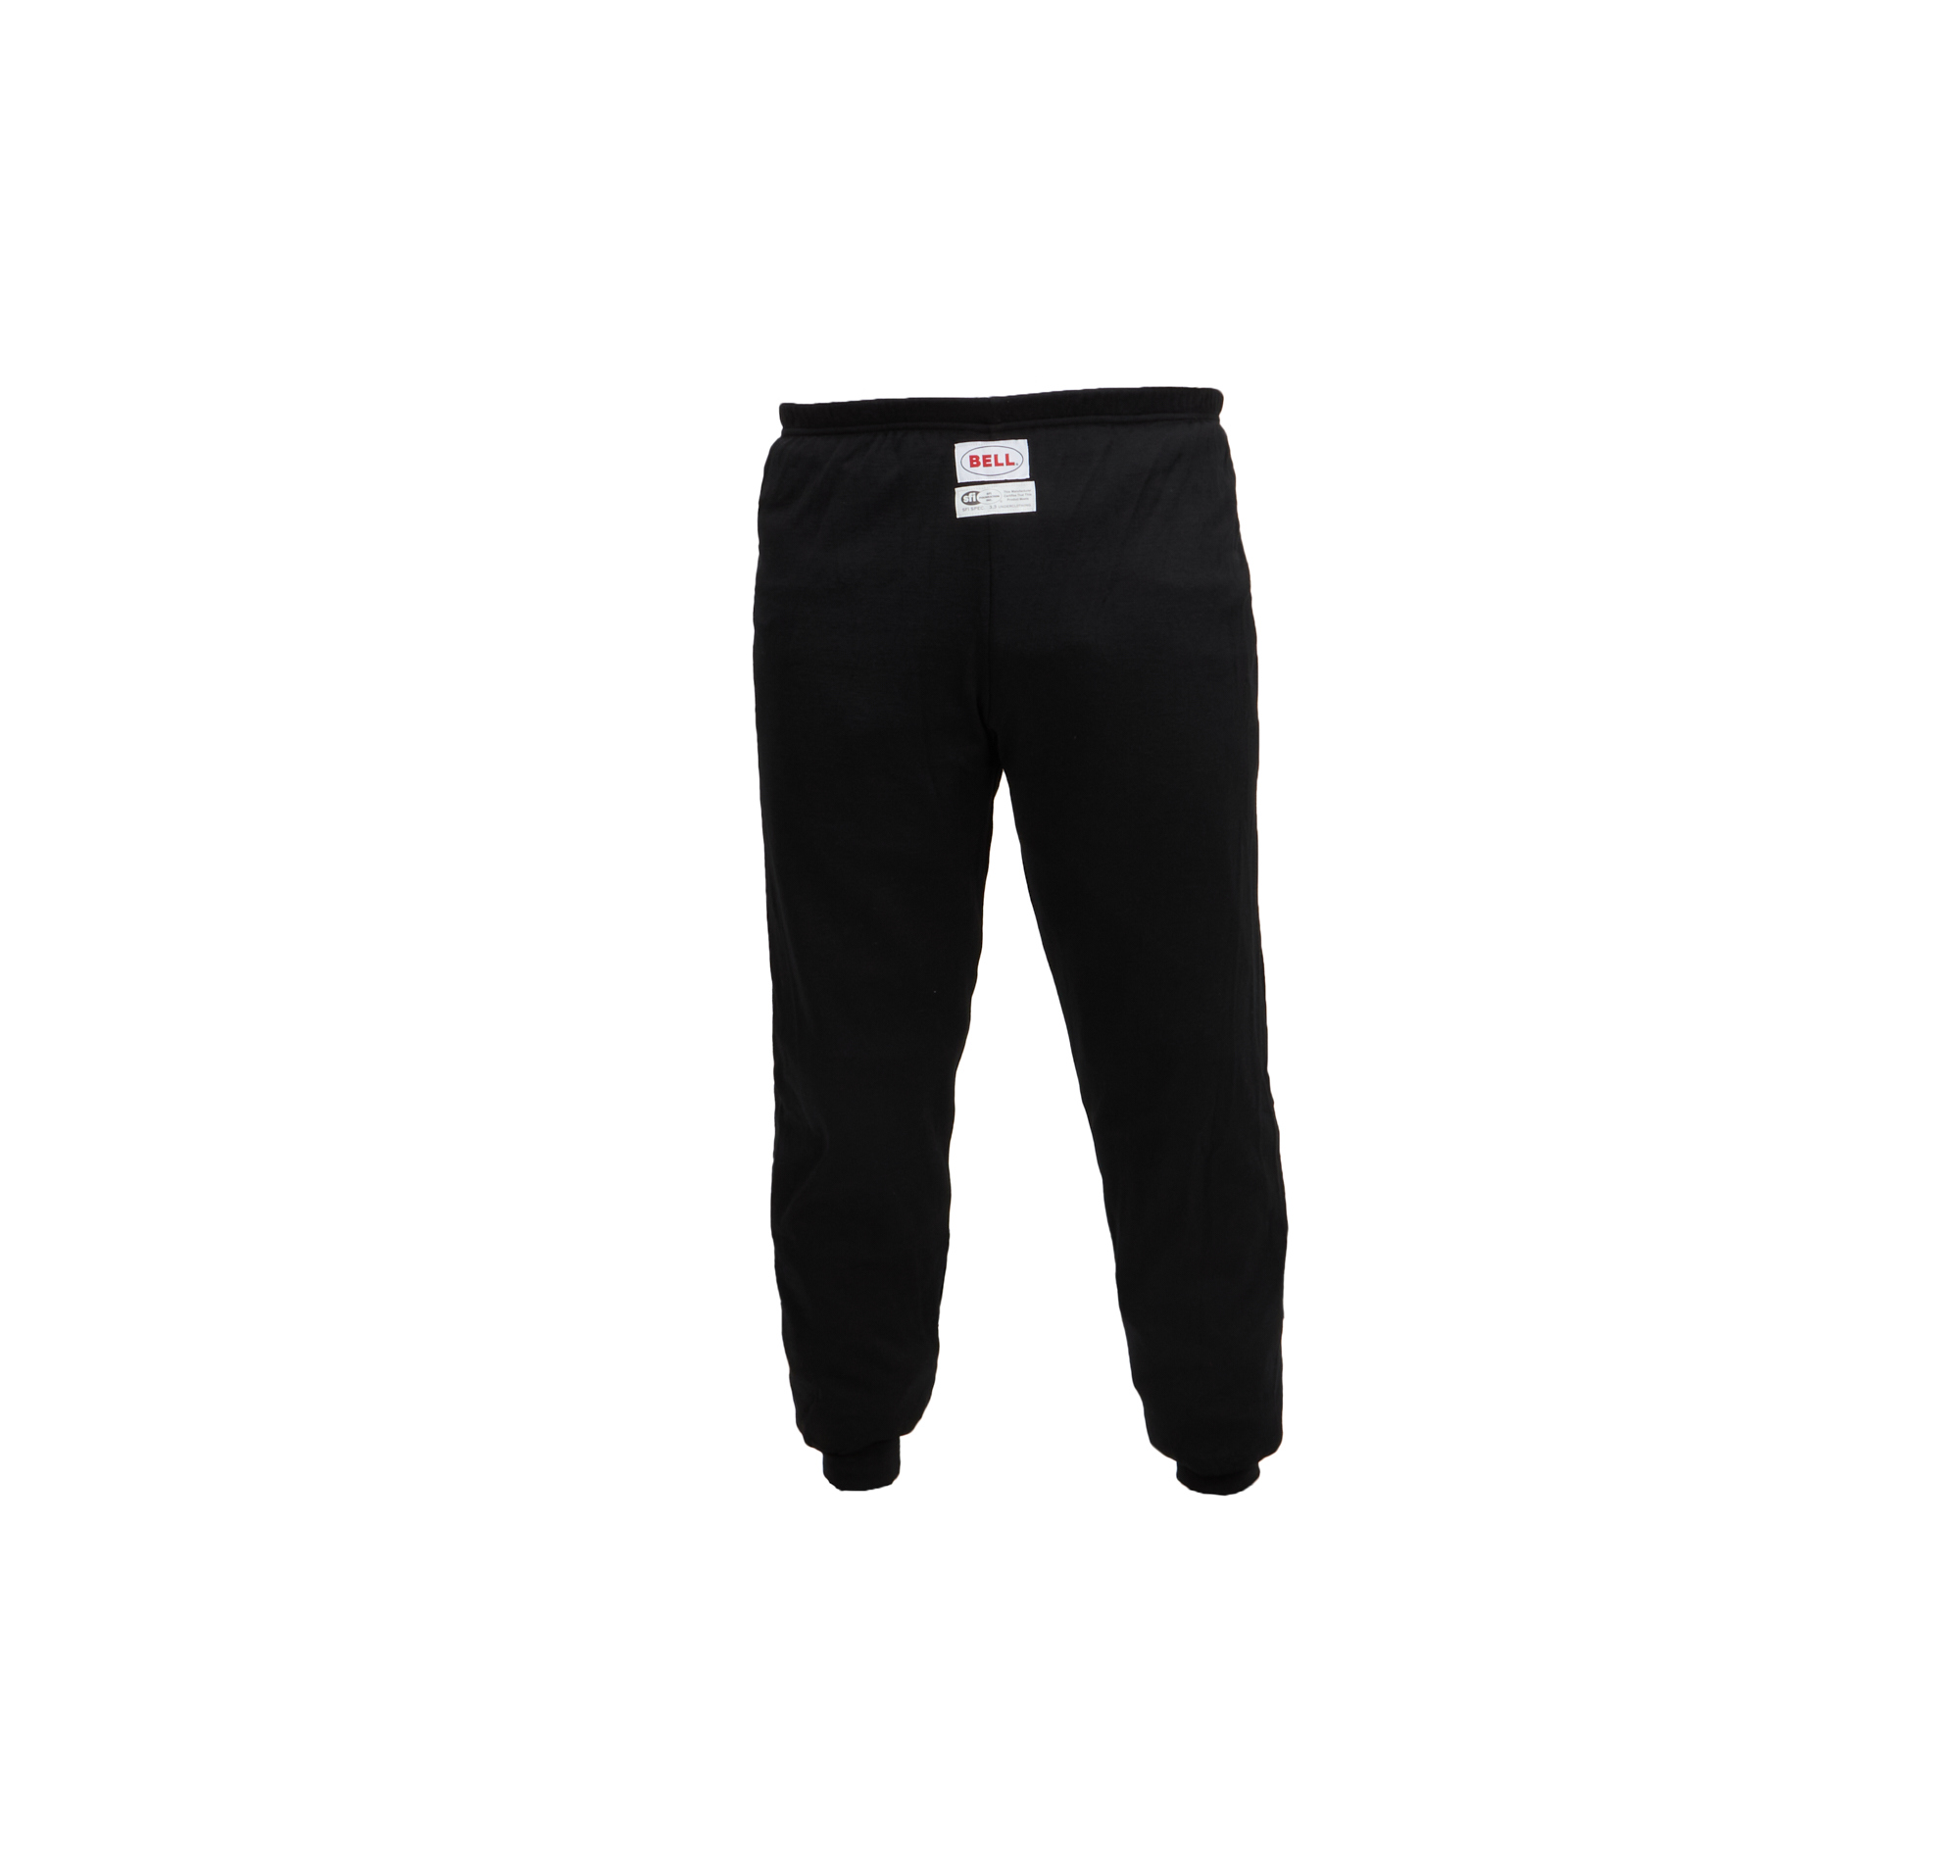 Underwear Bottom SPORT- TX Black Lrg SFI 3.3/5 - BR40083